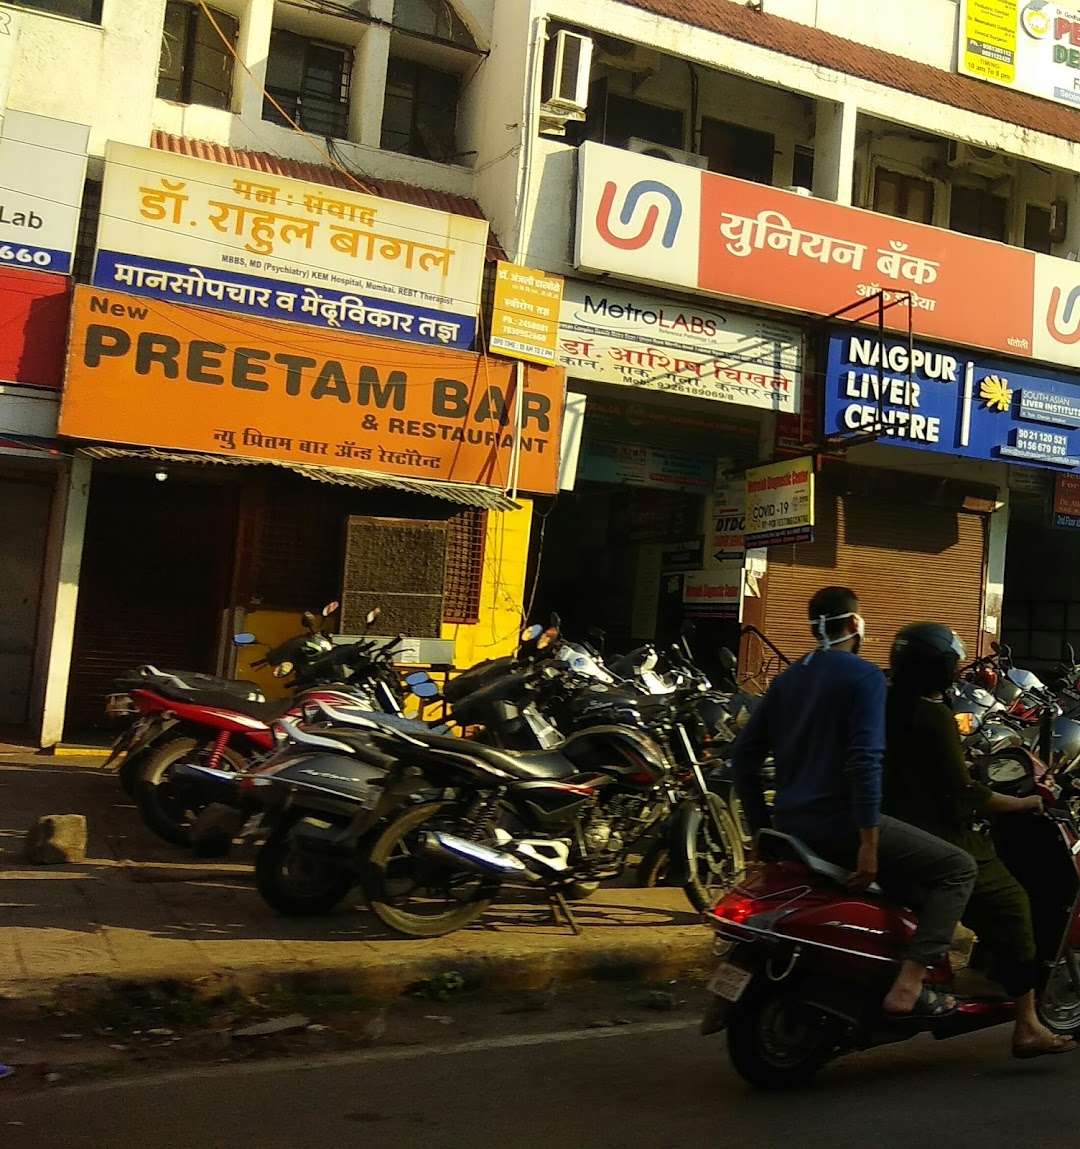 Preetam Bar and Restaurant